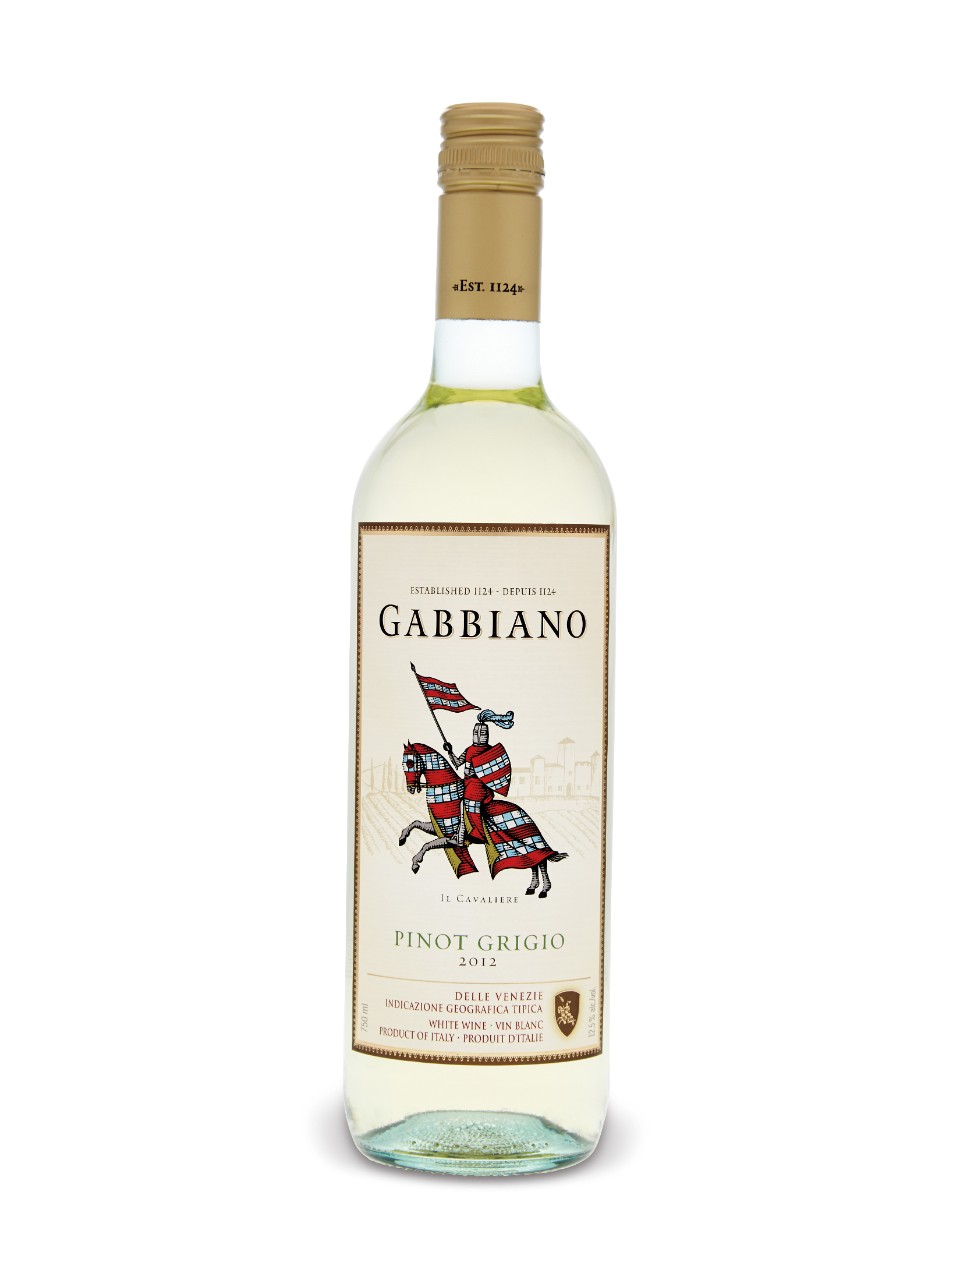 Gabbiano Pinot Grigio IGT